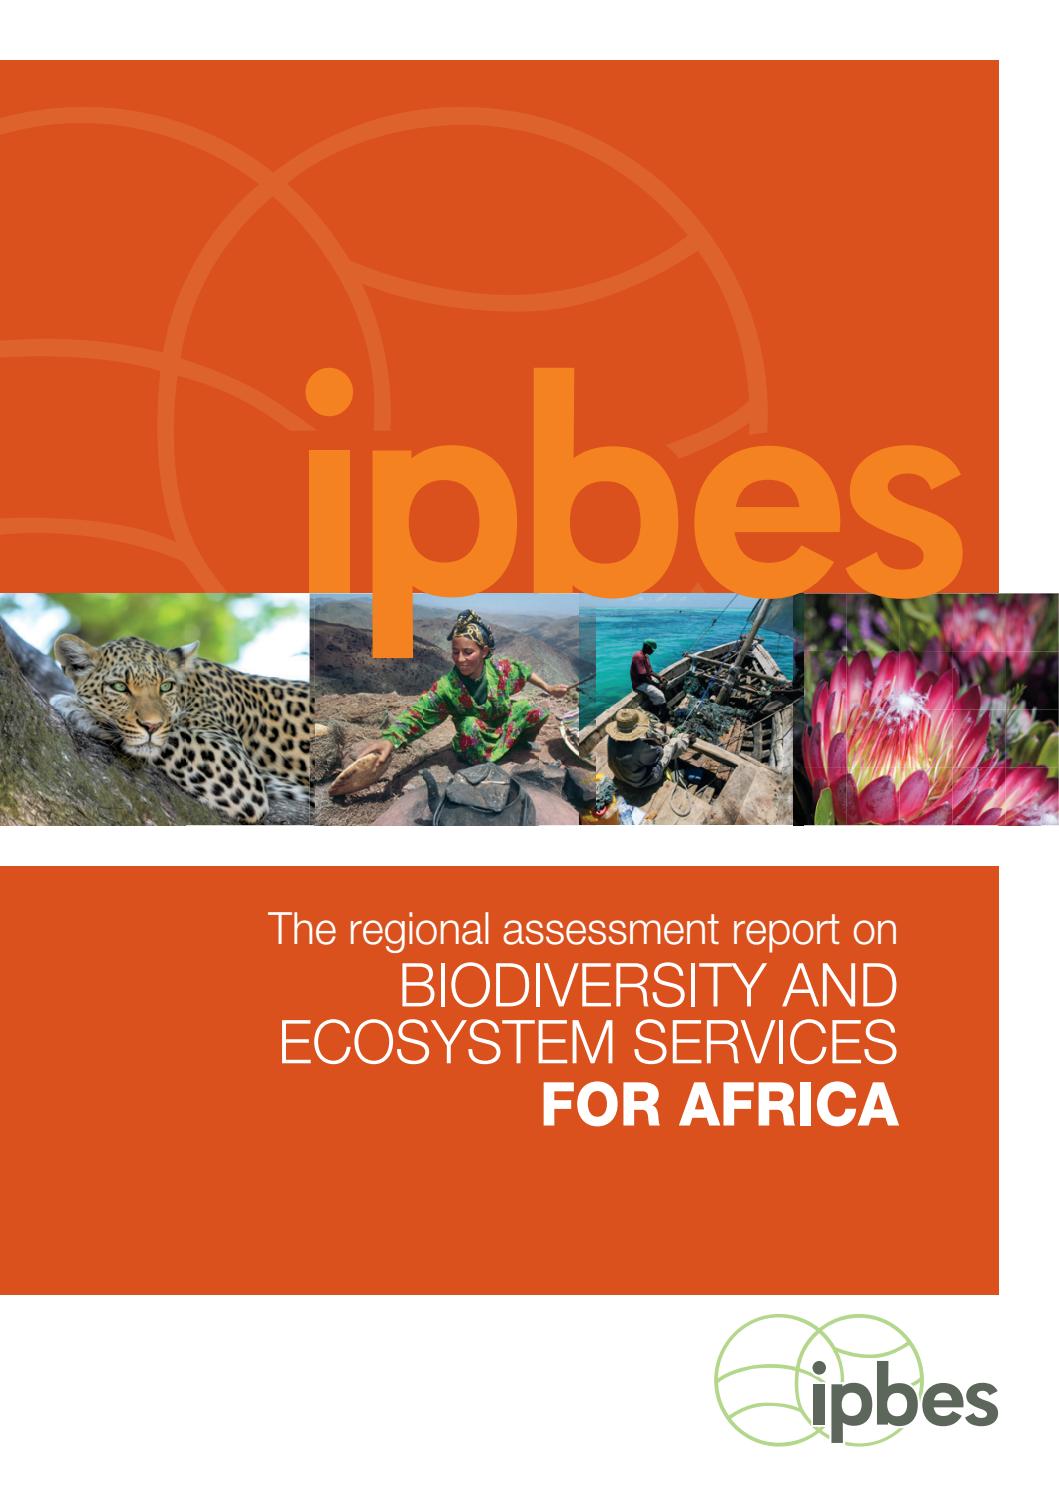 Herrenhäuser Garten Best Of 2019 Ipbes Regional assessment Africa by Maro Haas issuu